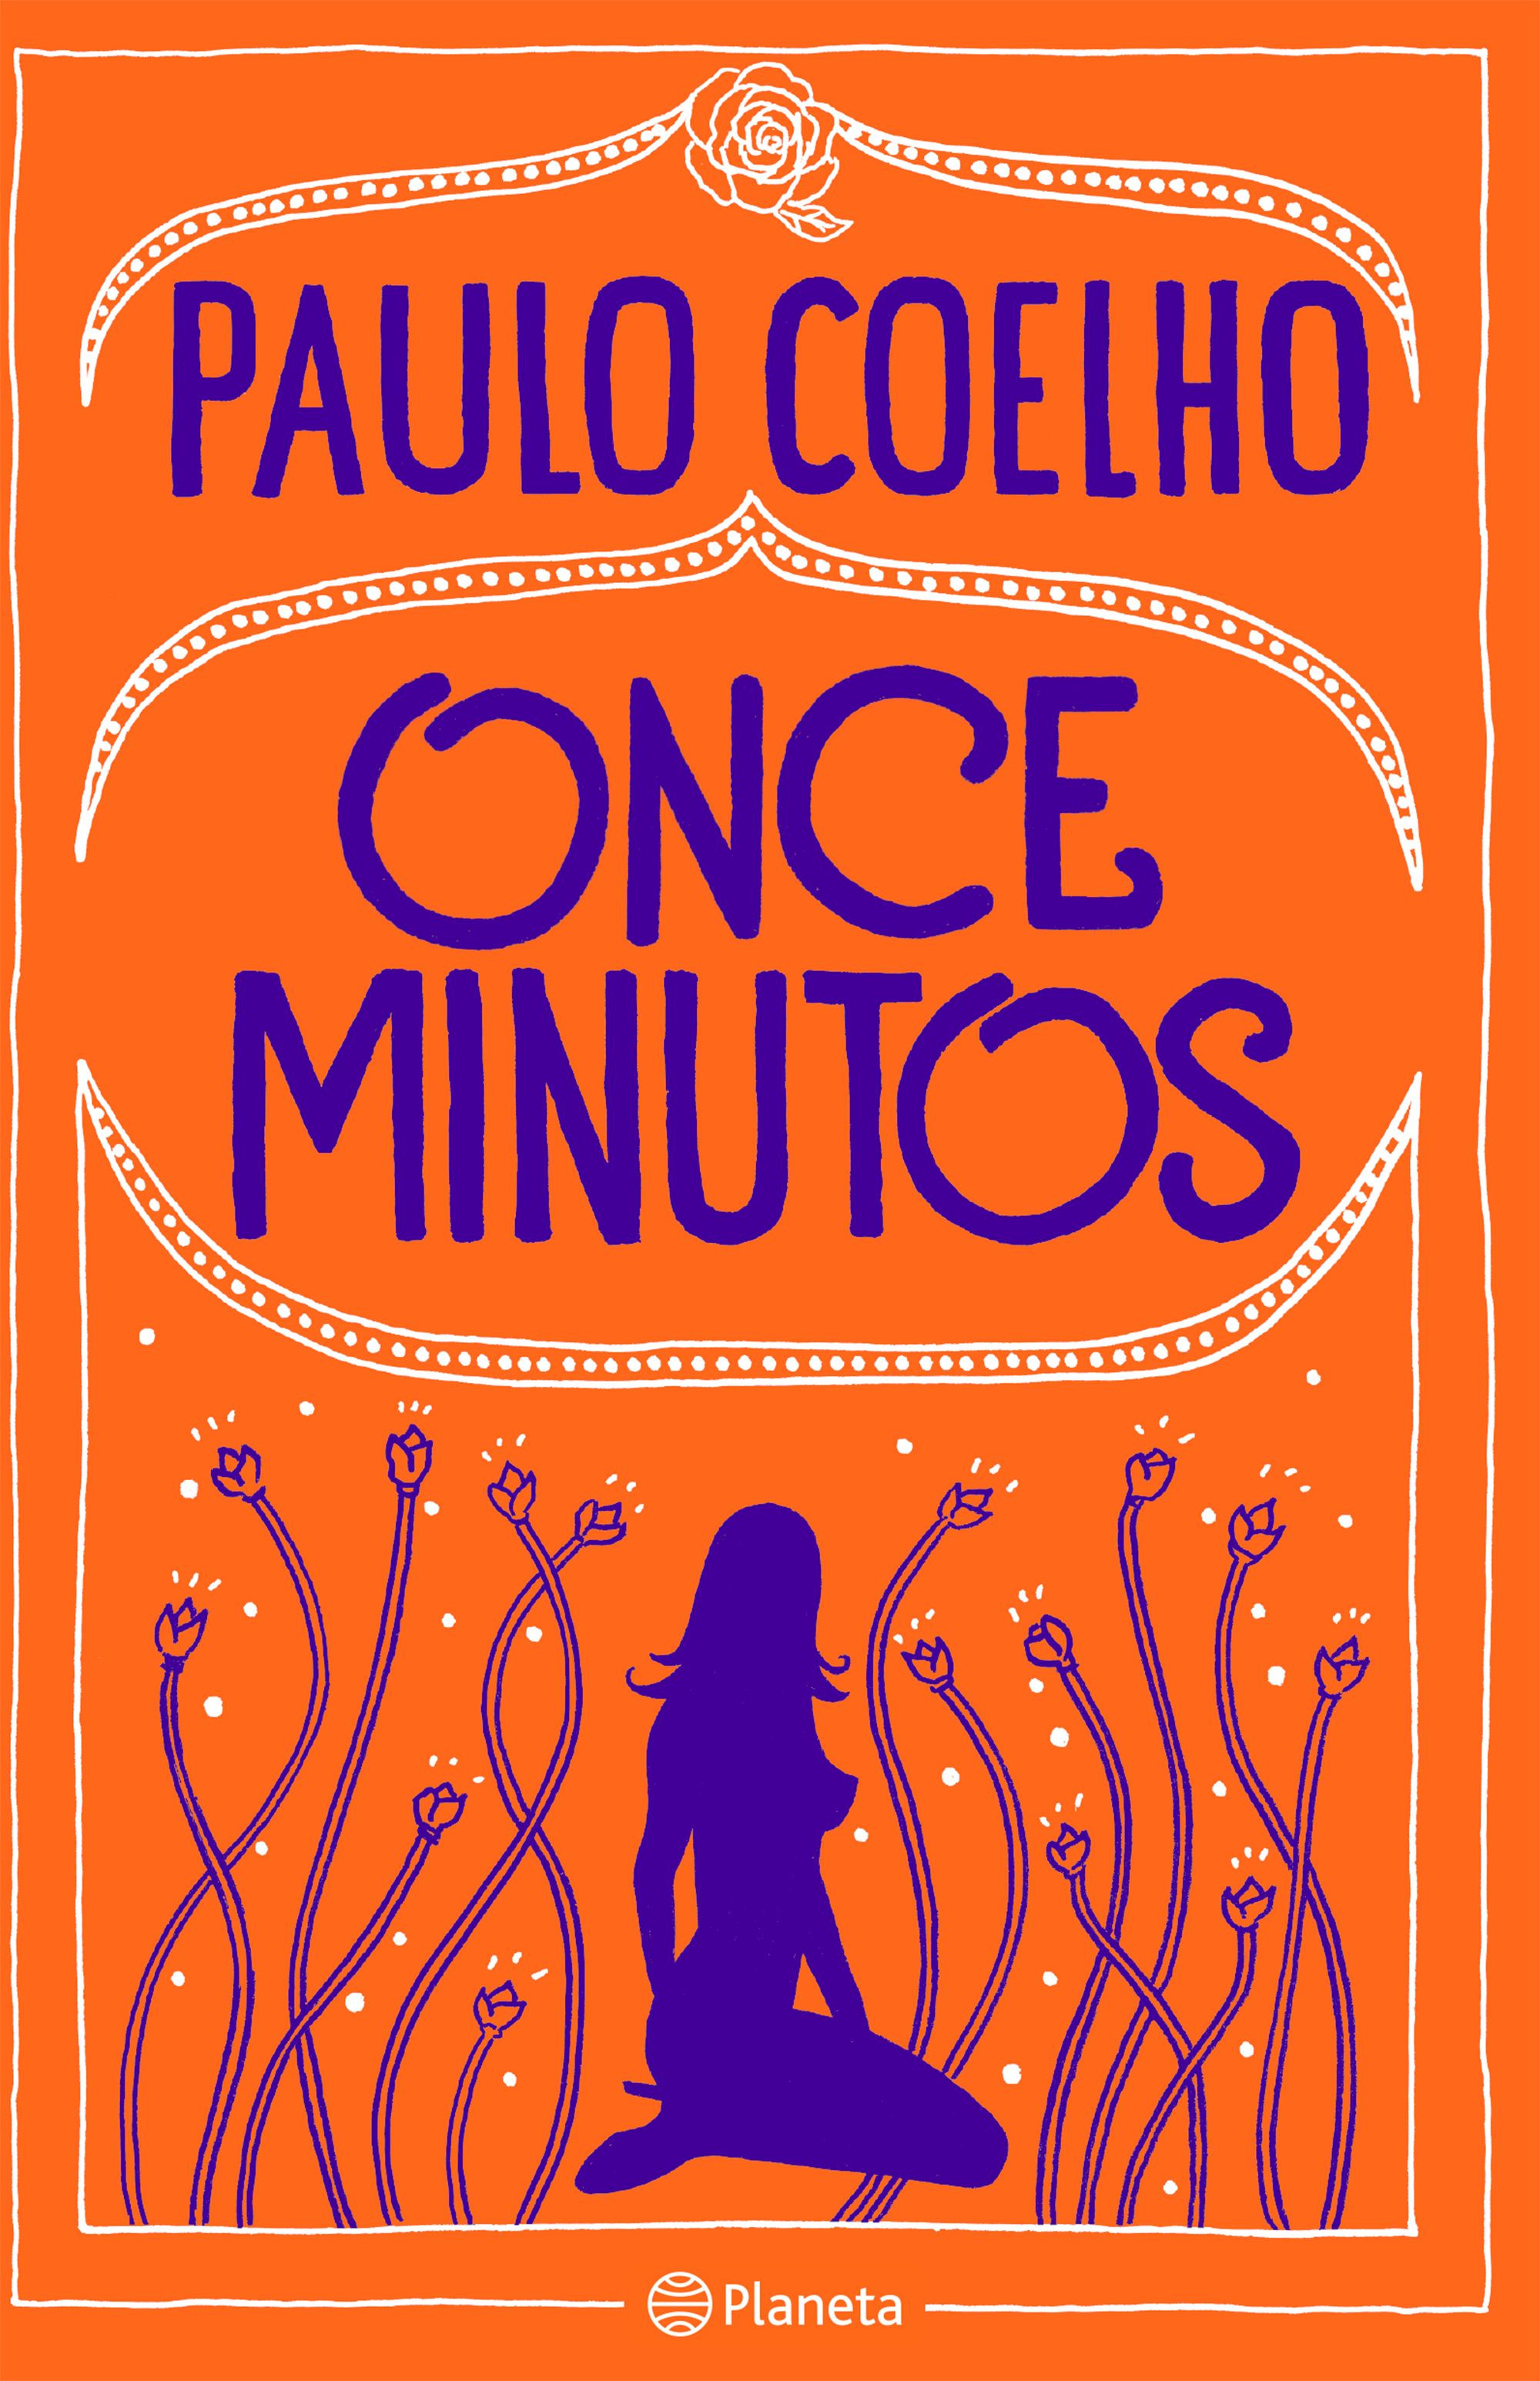 Imagen Once Minutos.  Paulo Coelho 1